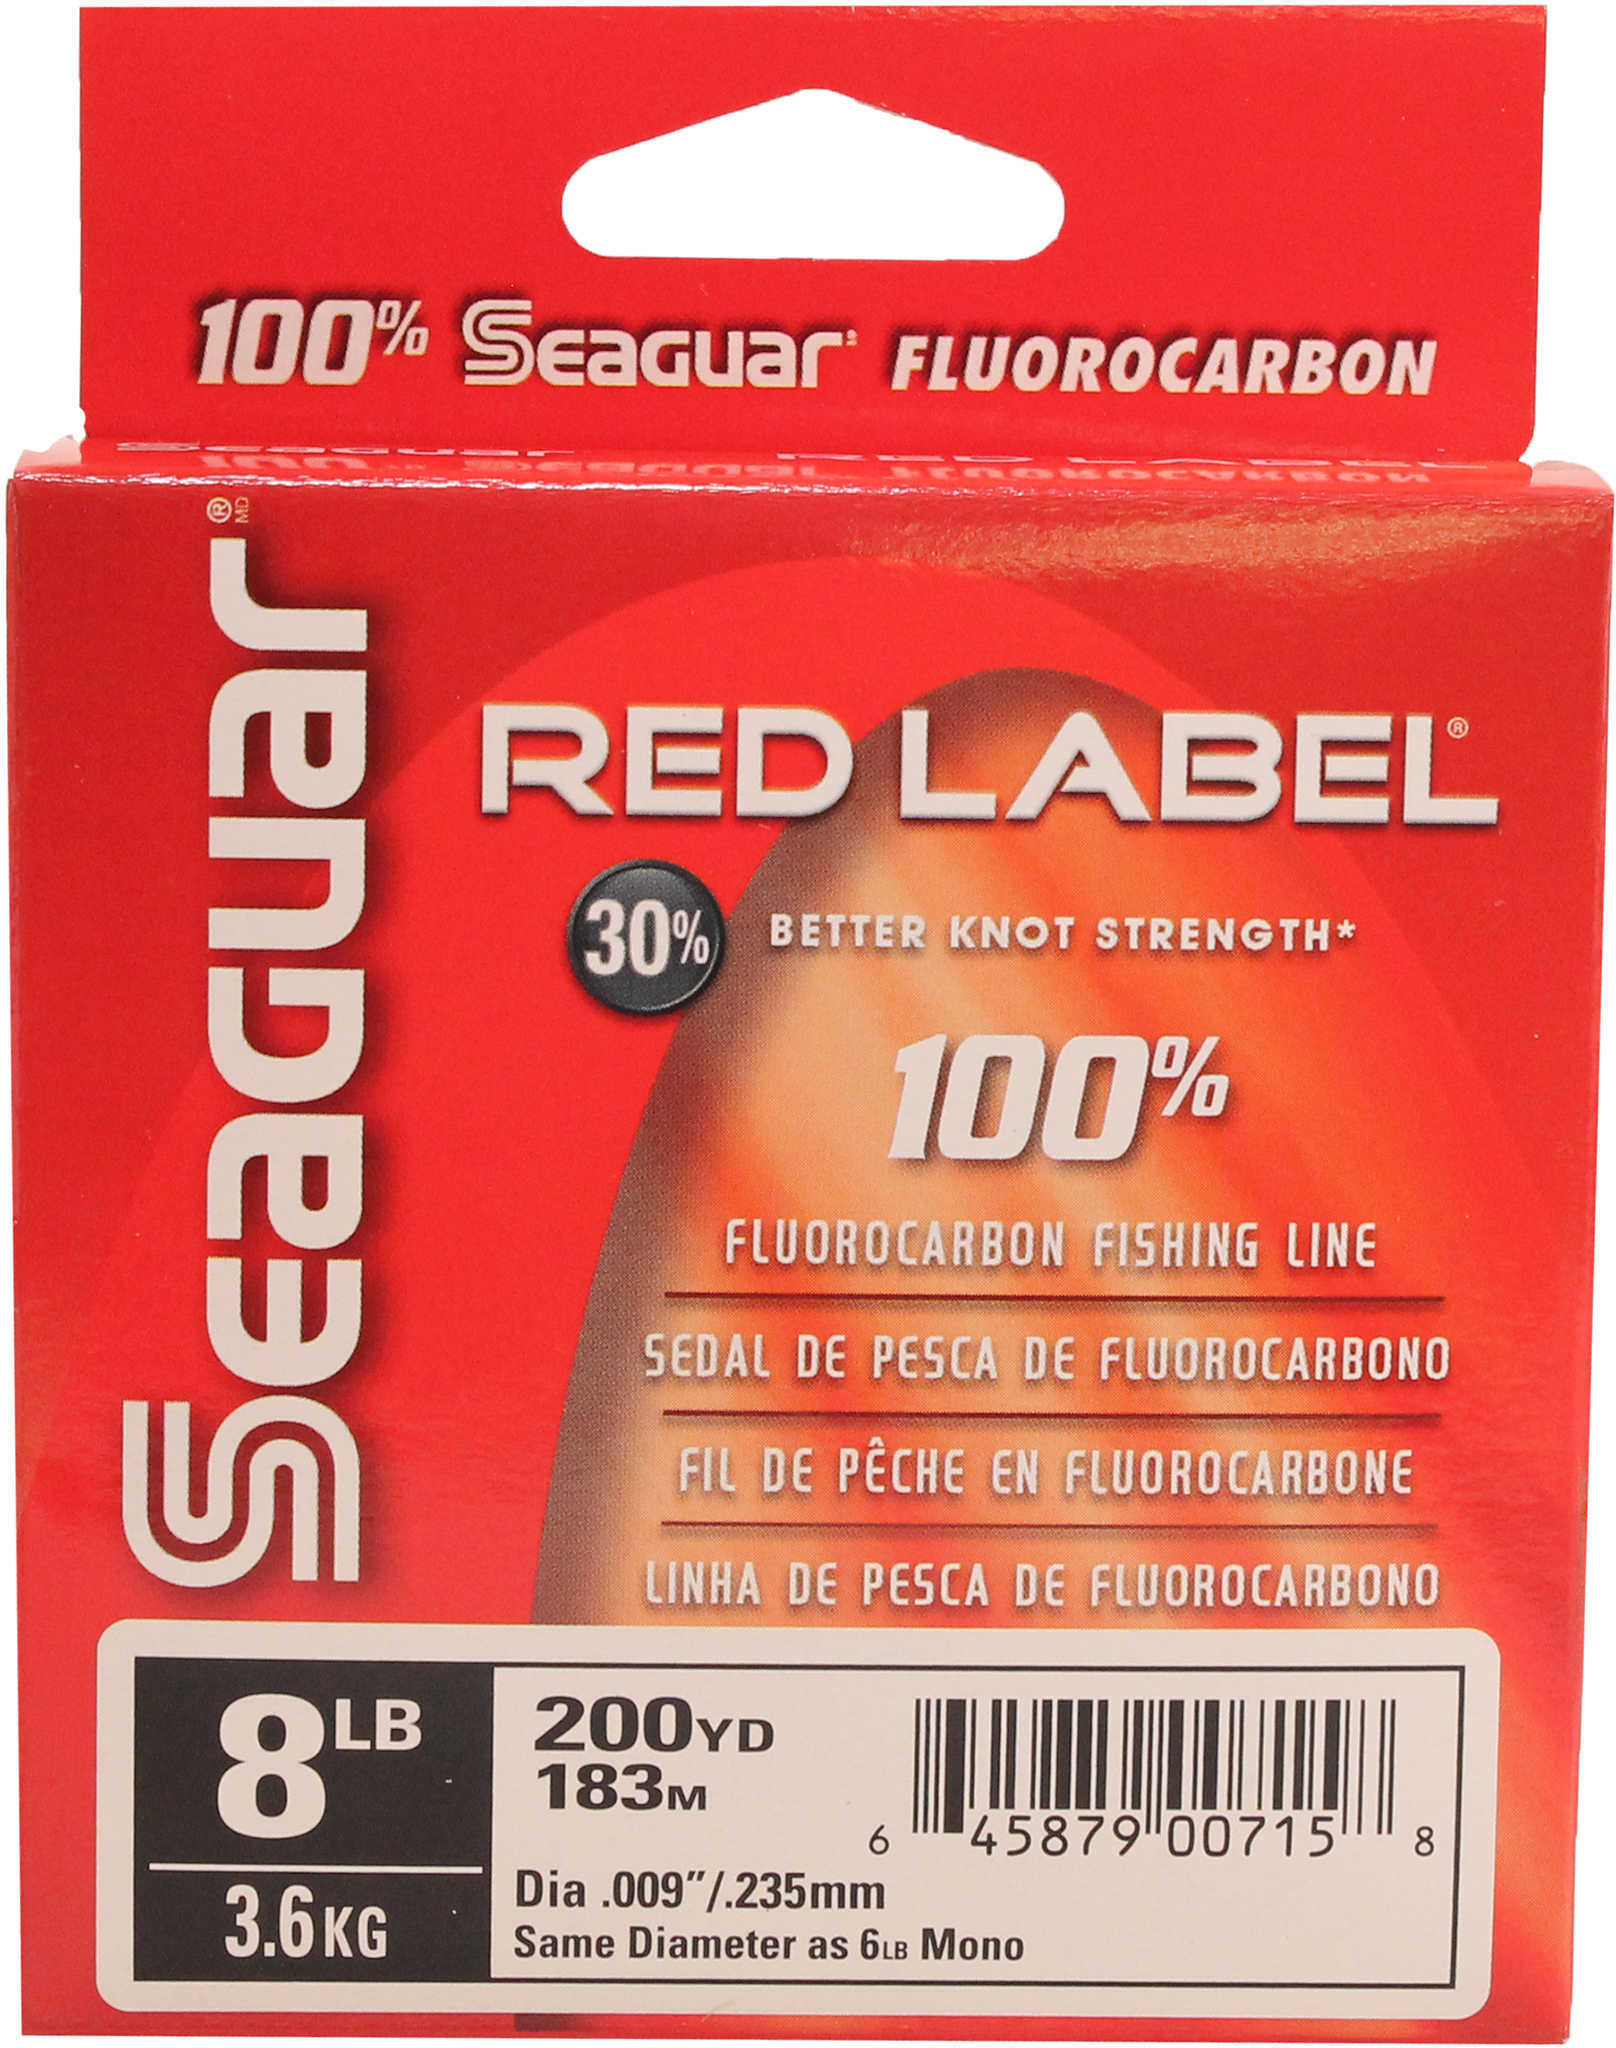 Seaguar / Kureha America Red Label Fluorcarbon Clear 250yds 8lb Md#: 08RM-250